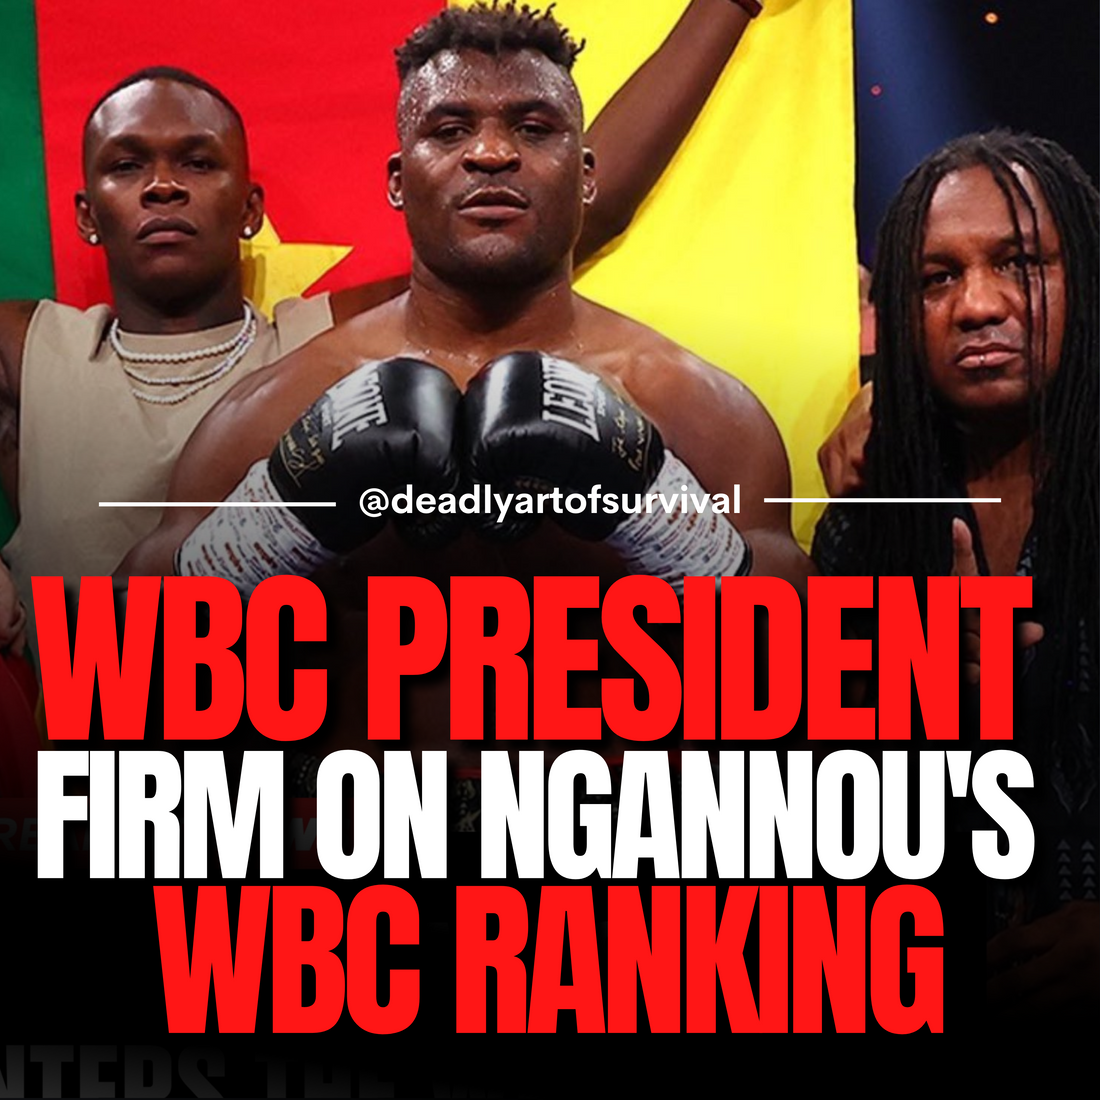 WBC President Backs Ngannou's WBC Ranking